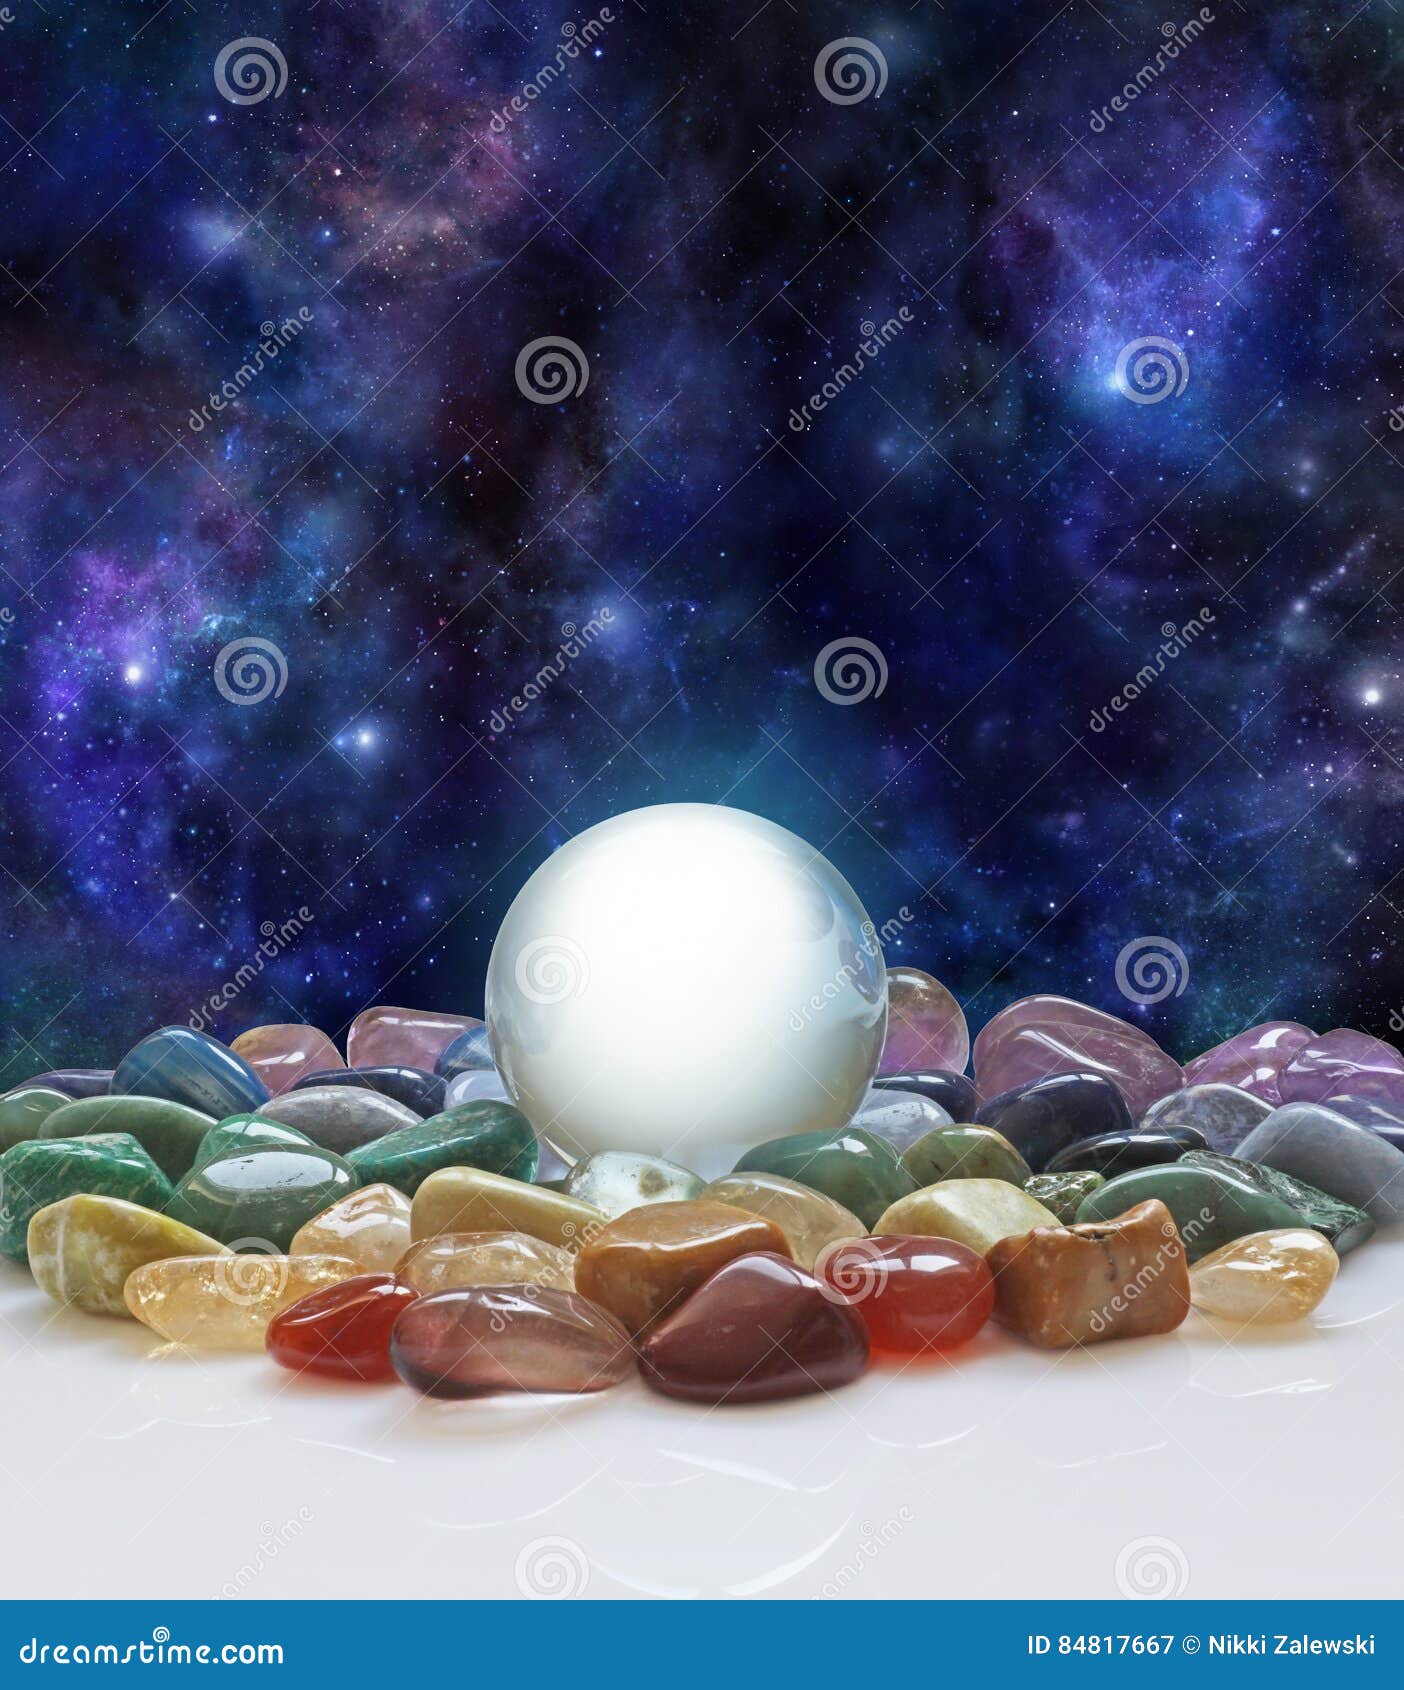 crystal ball, healing crystals and the universe